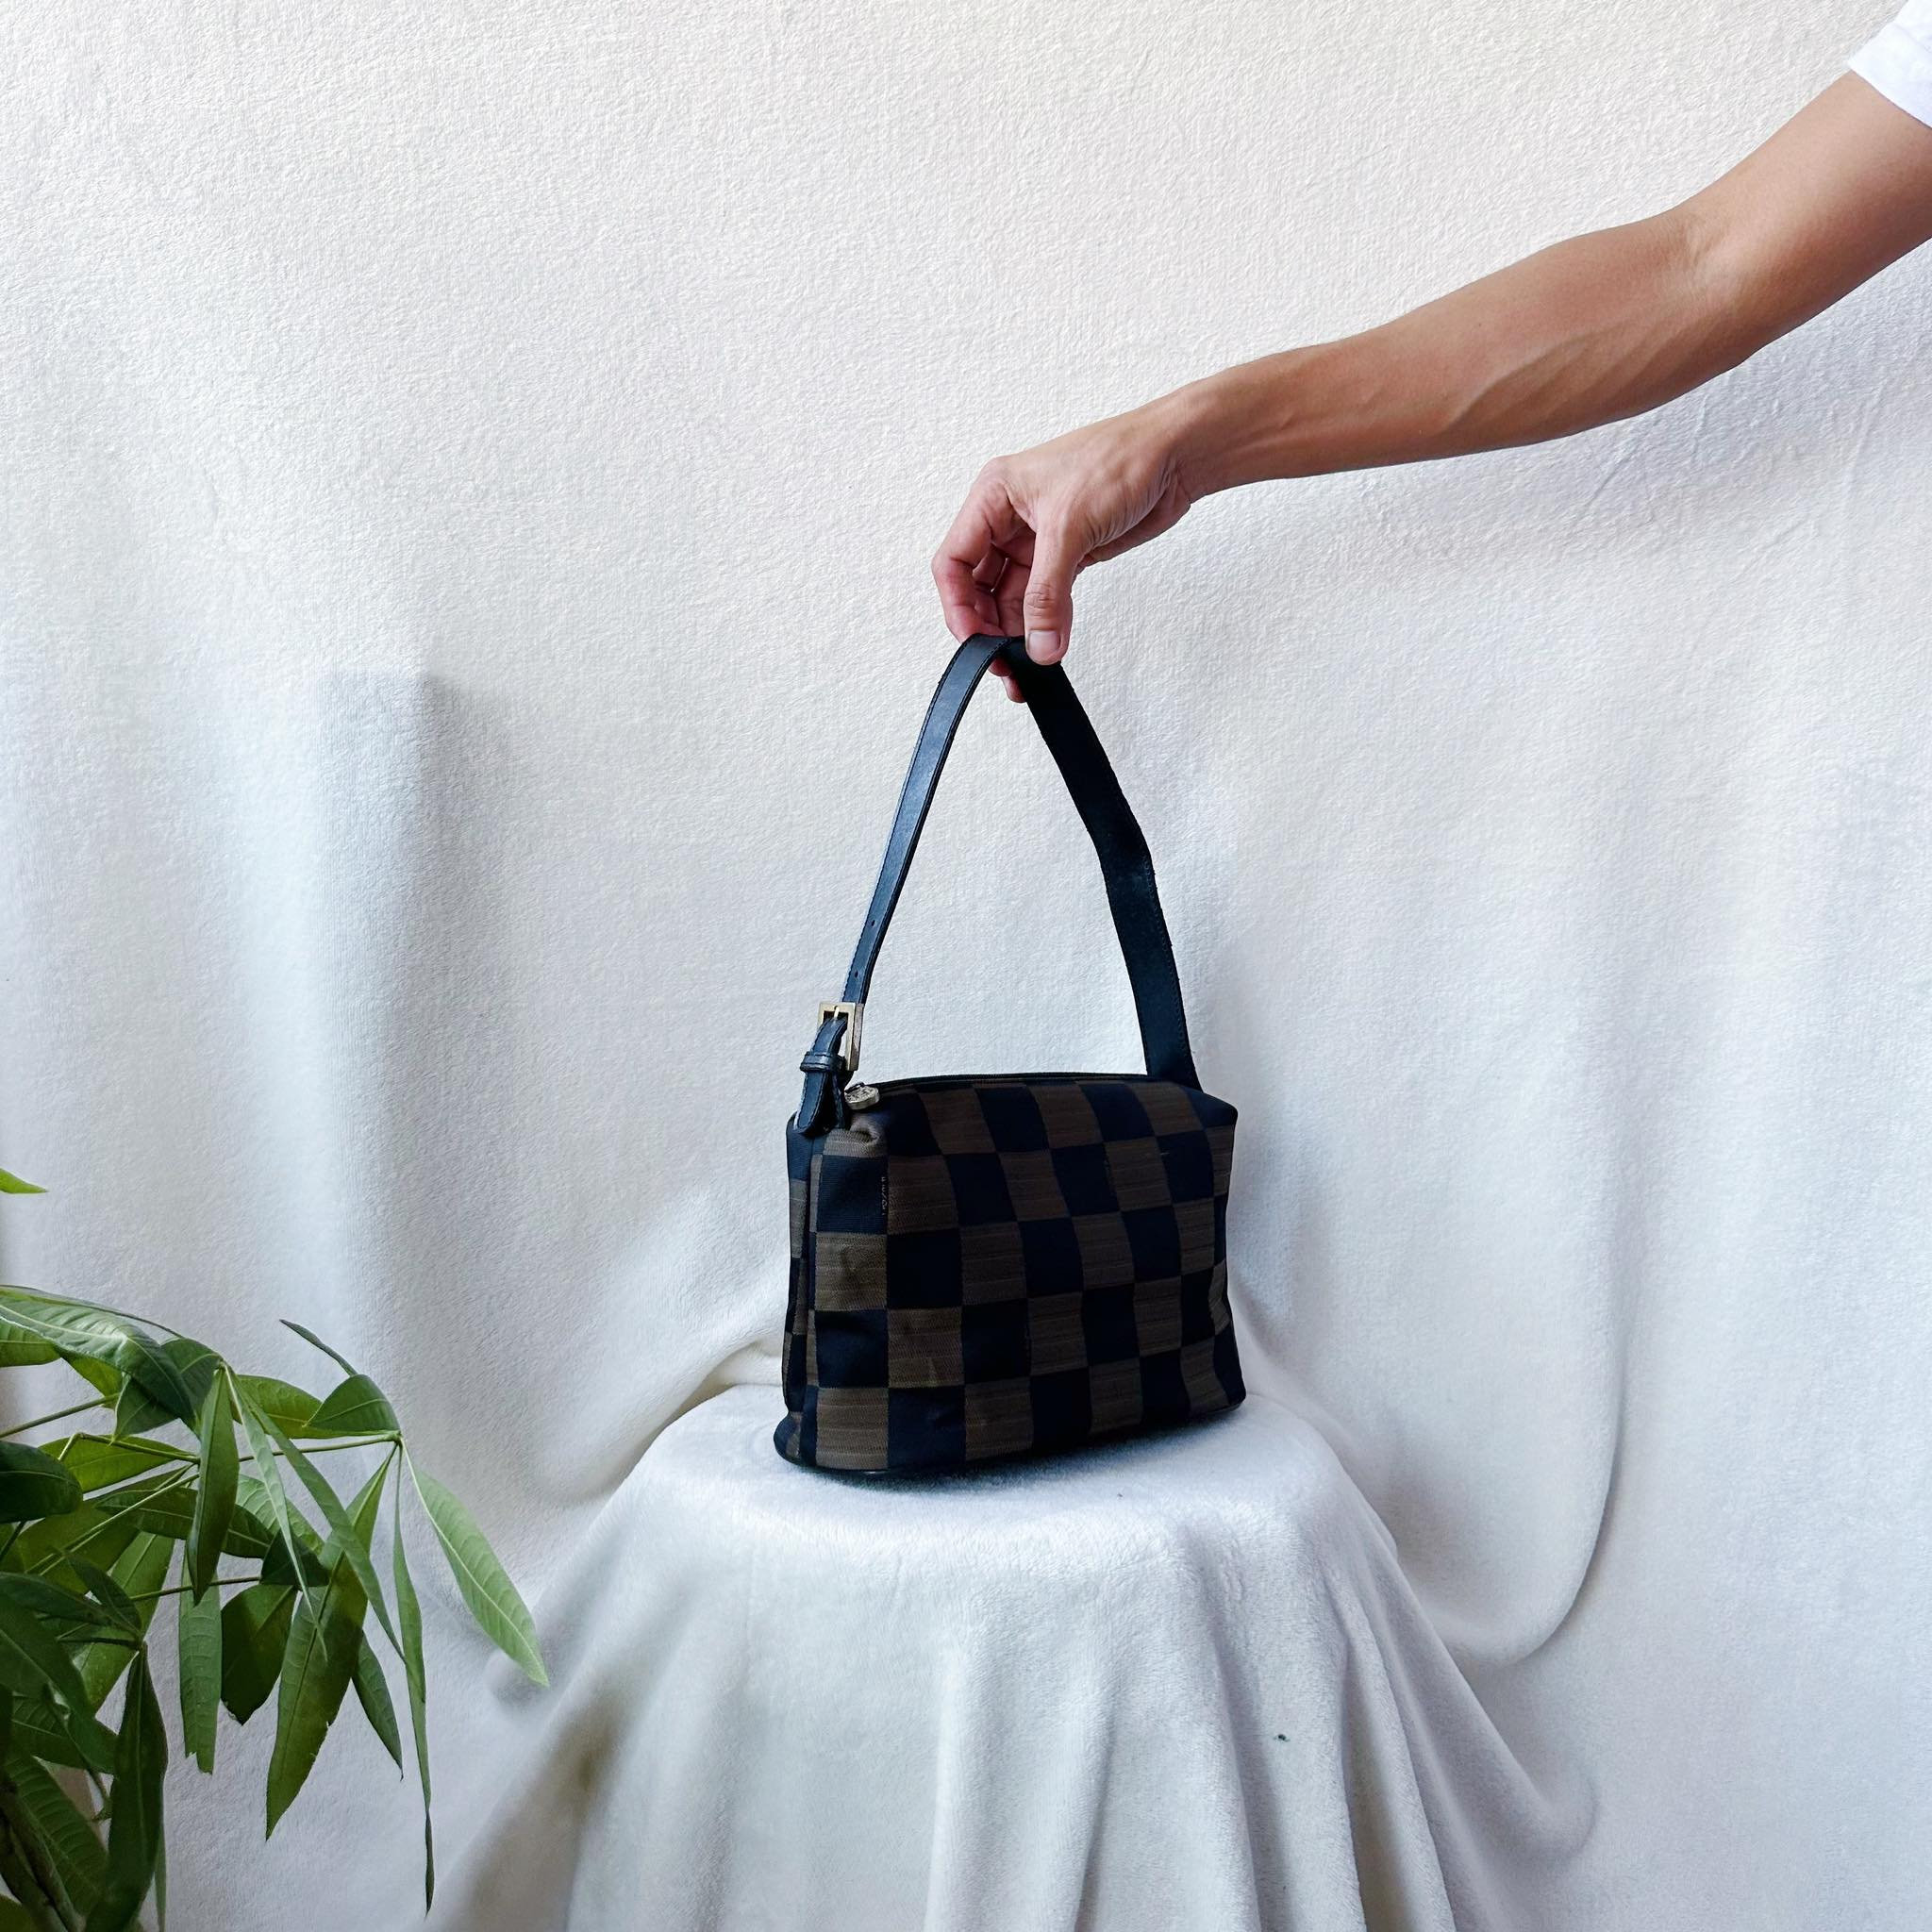 Louis Vuitton, multi pochette bag, dhgate bags, grunge look